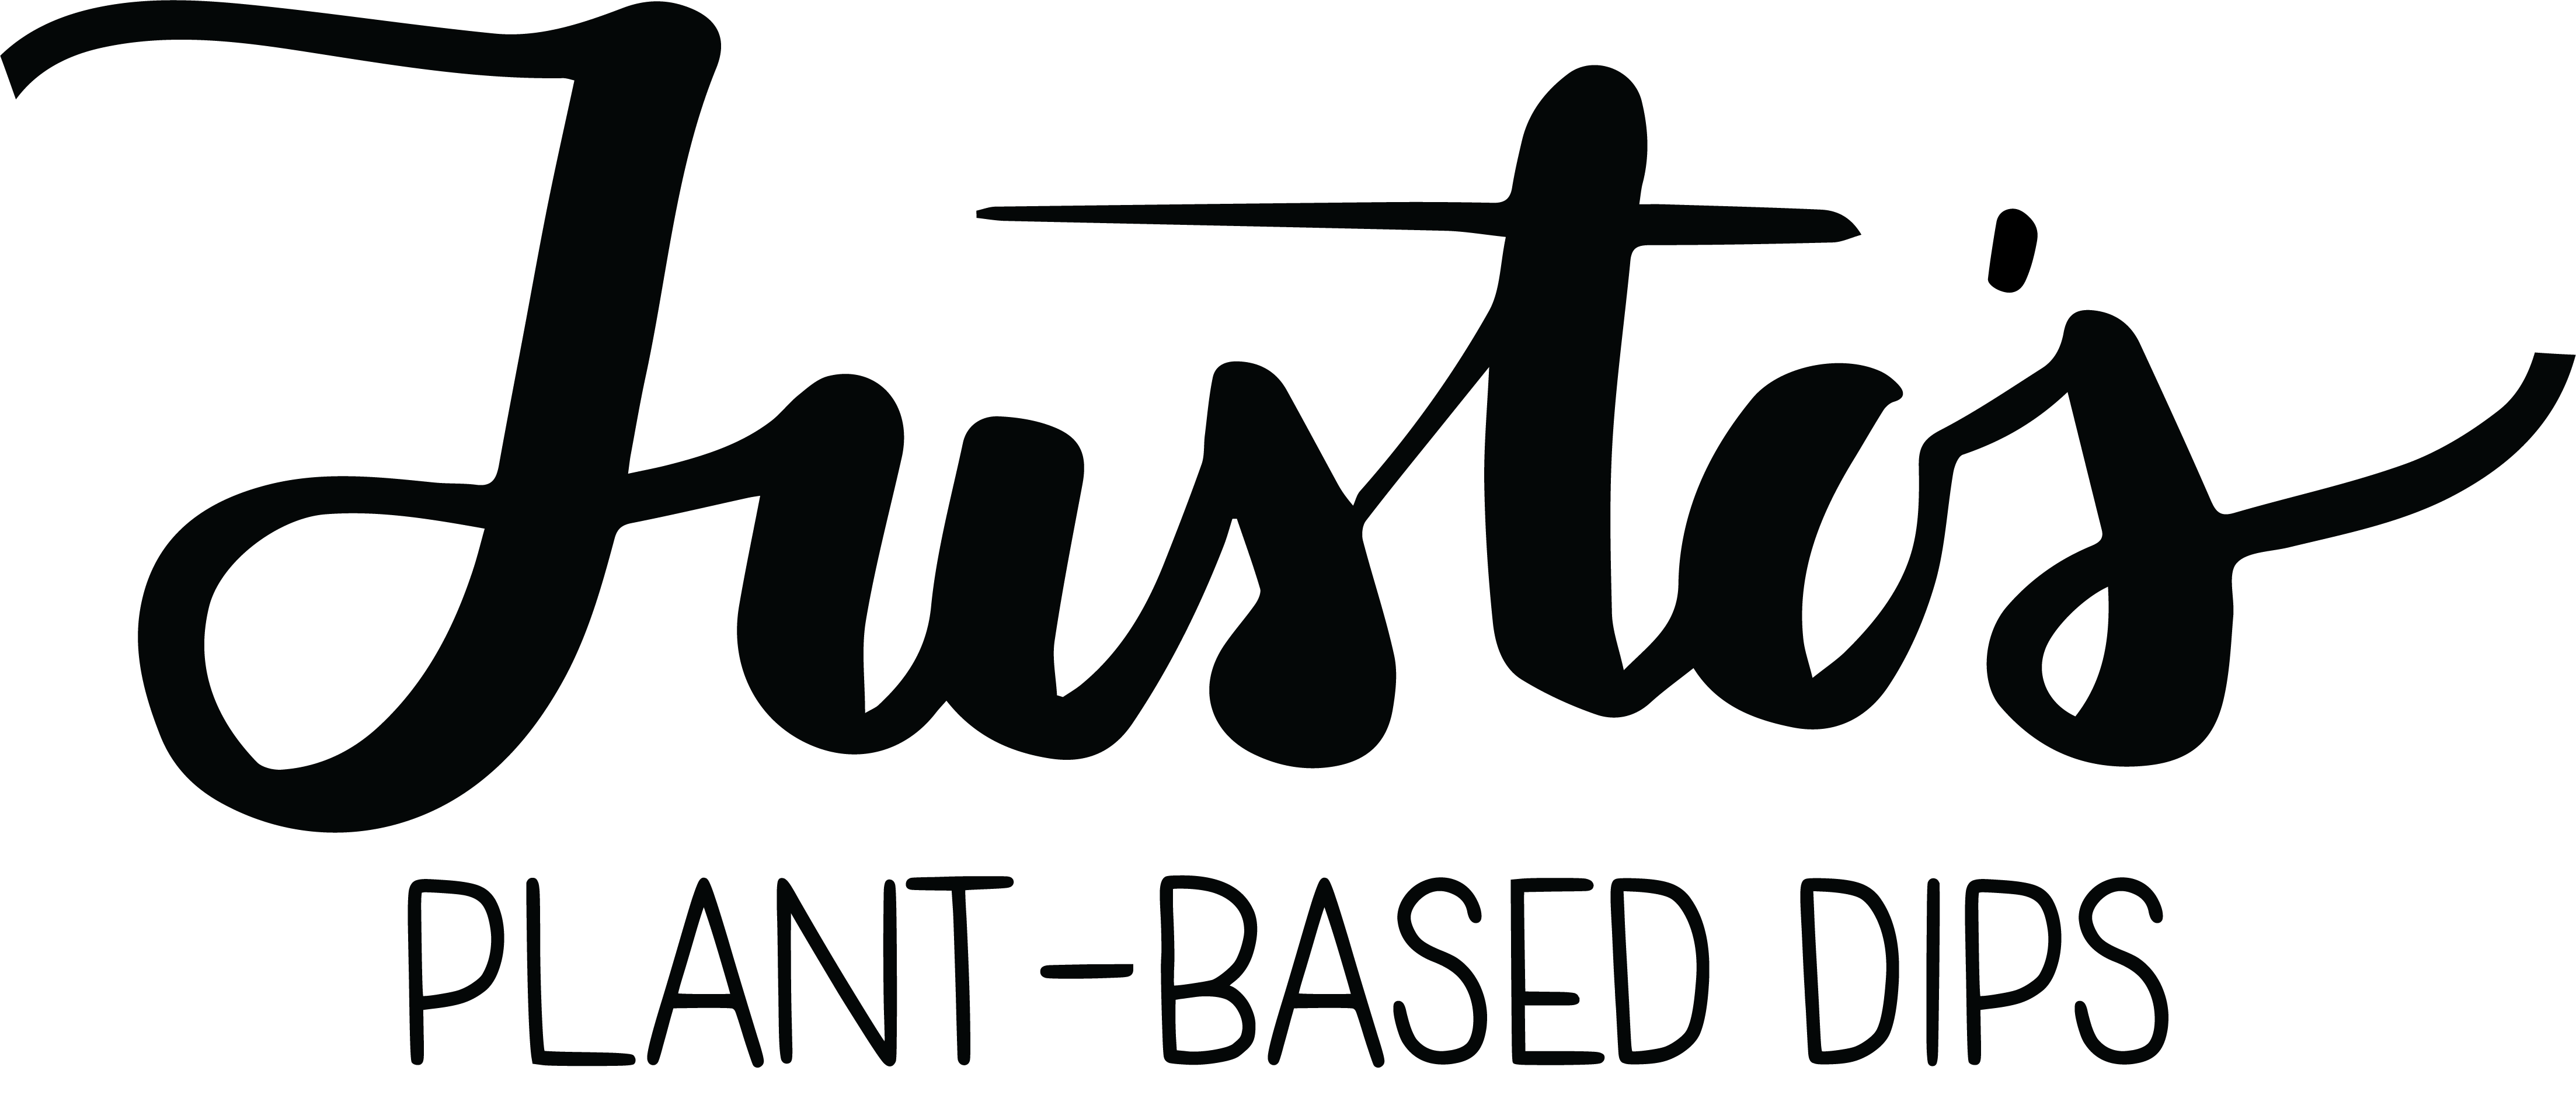 Justo's Plant Based Dips logo image.